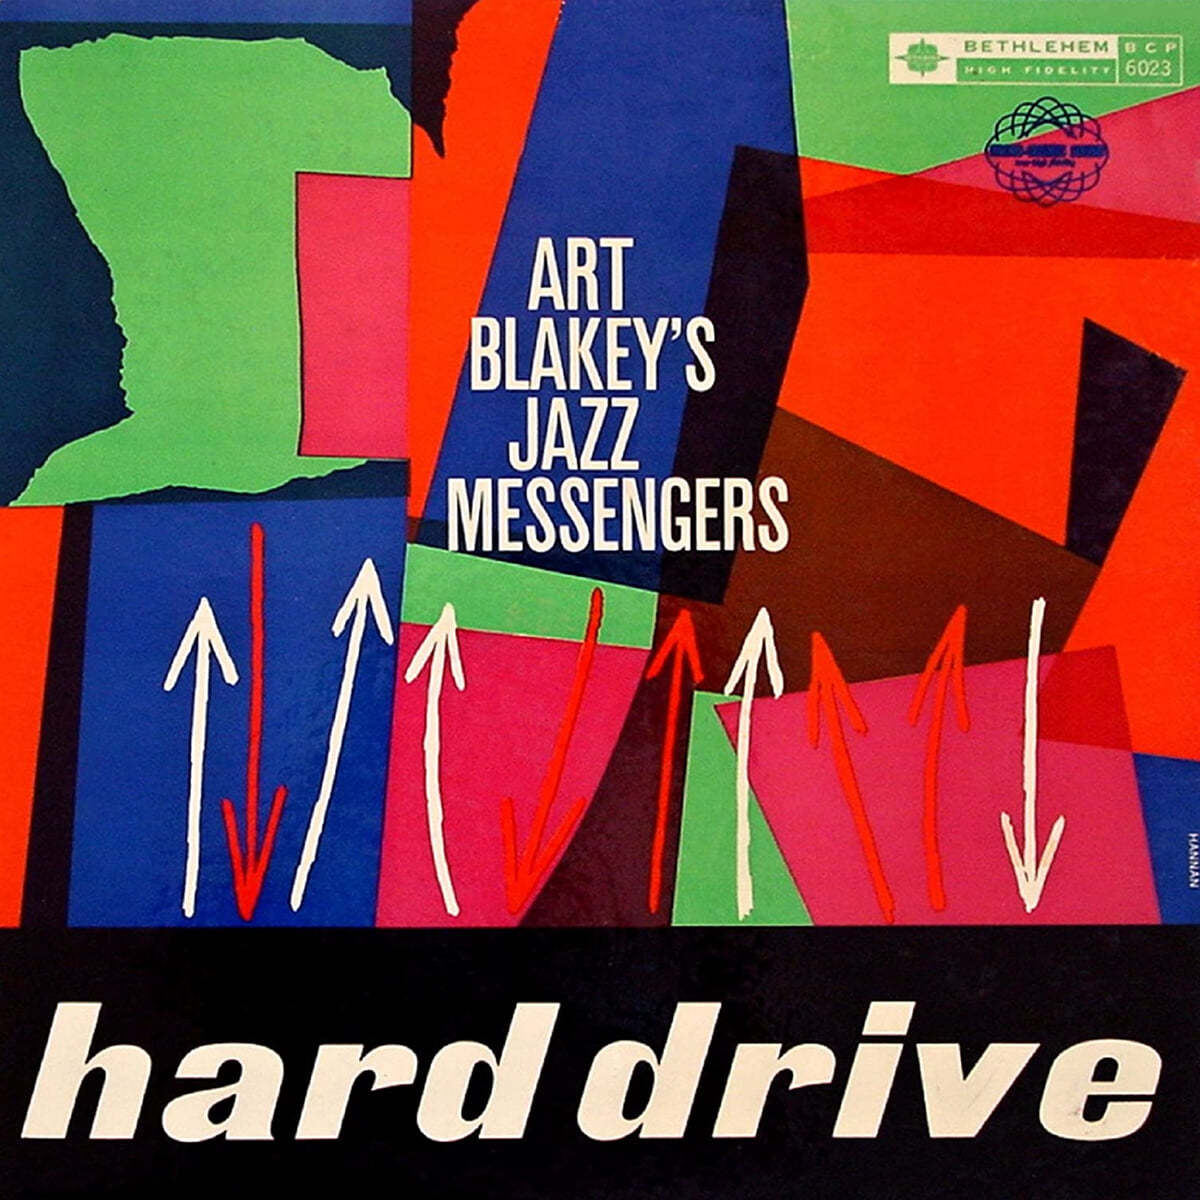 Art Blakey / The Jazz Messengers (아트 블랭키) - Hard Drive